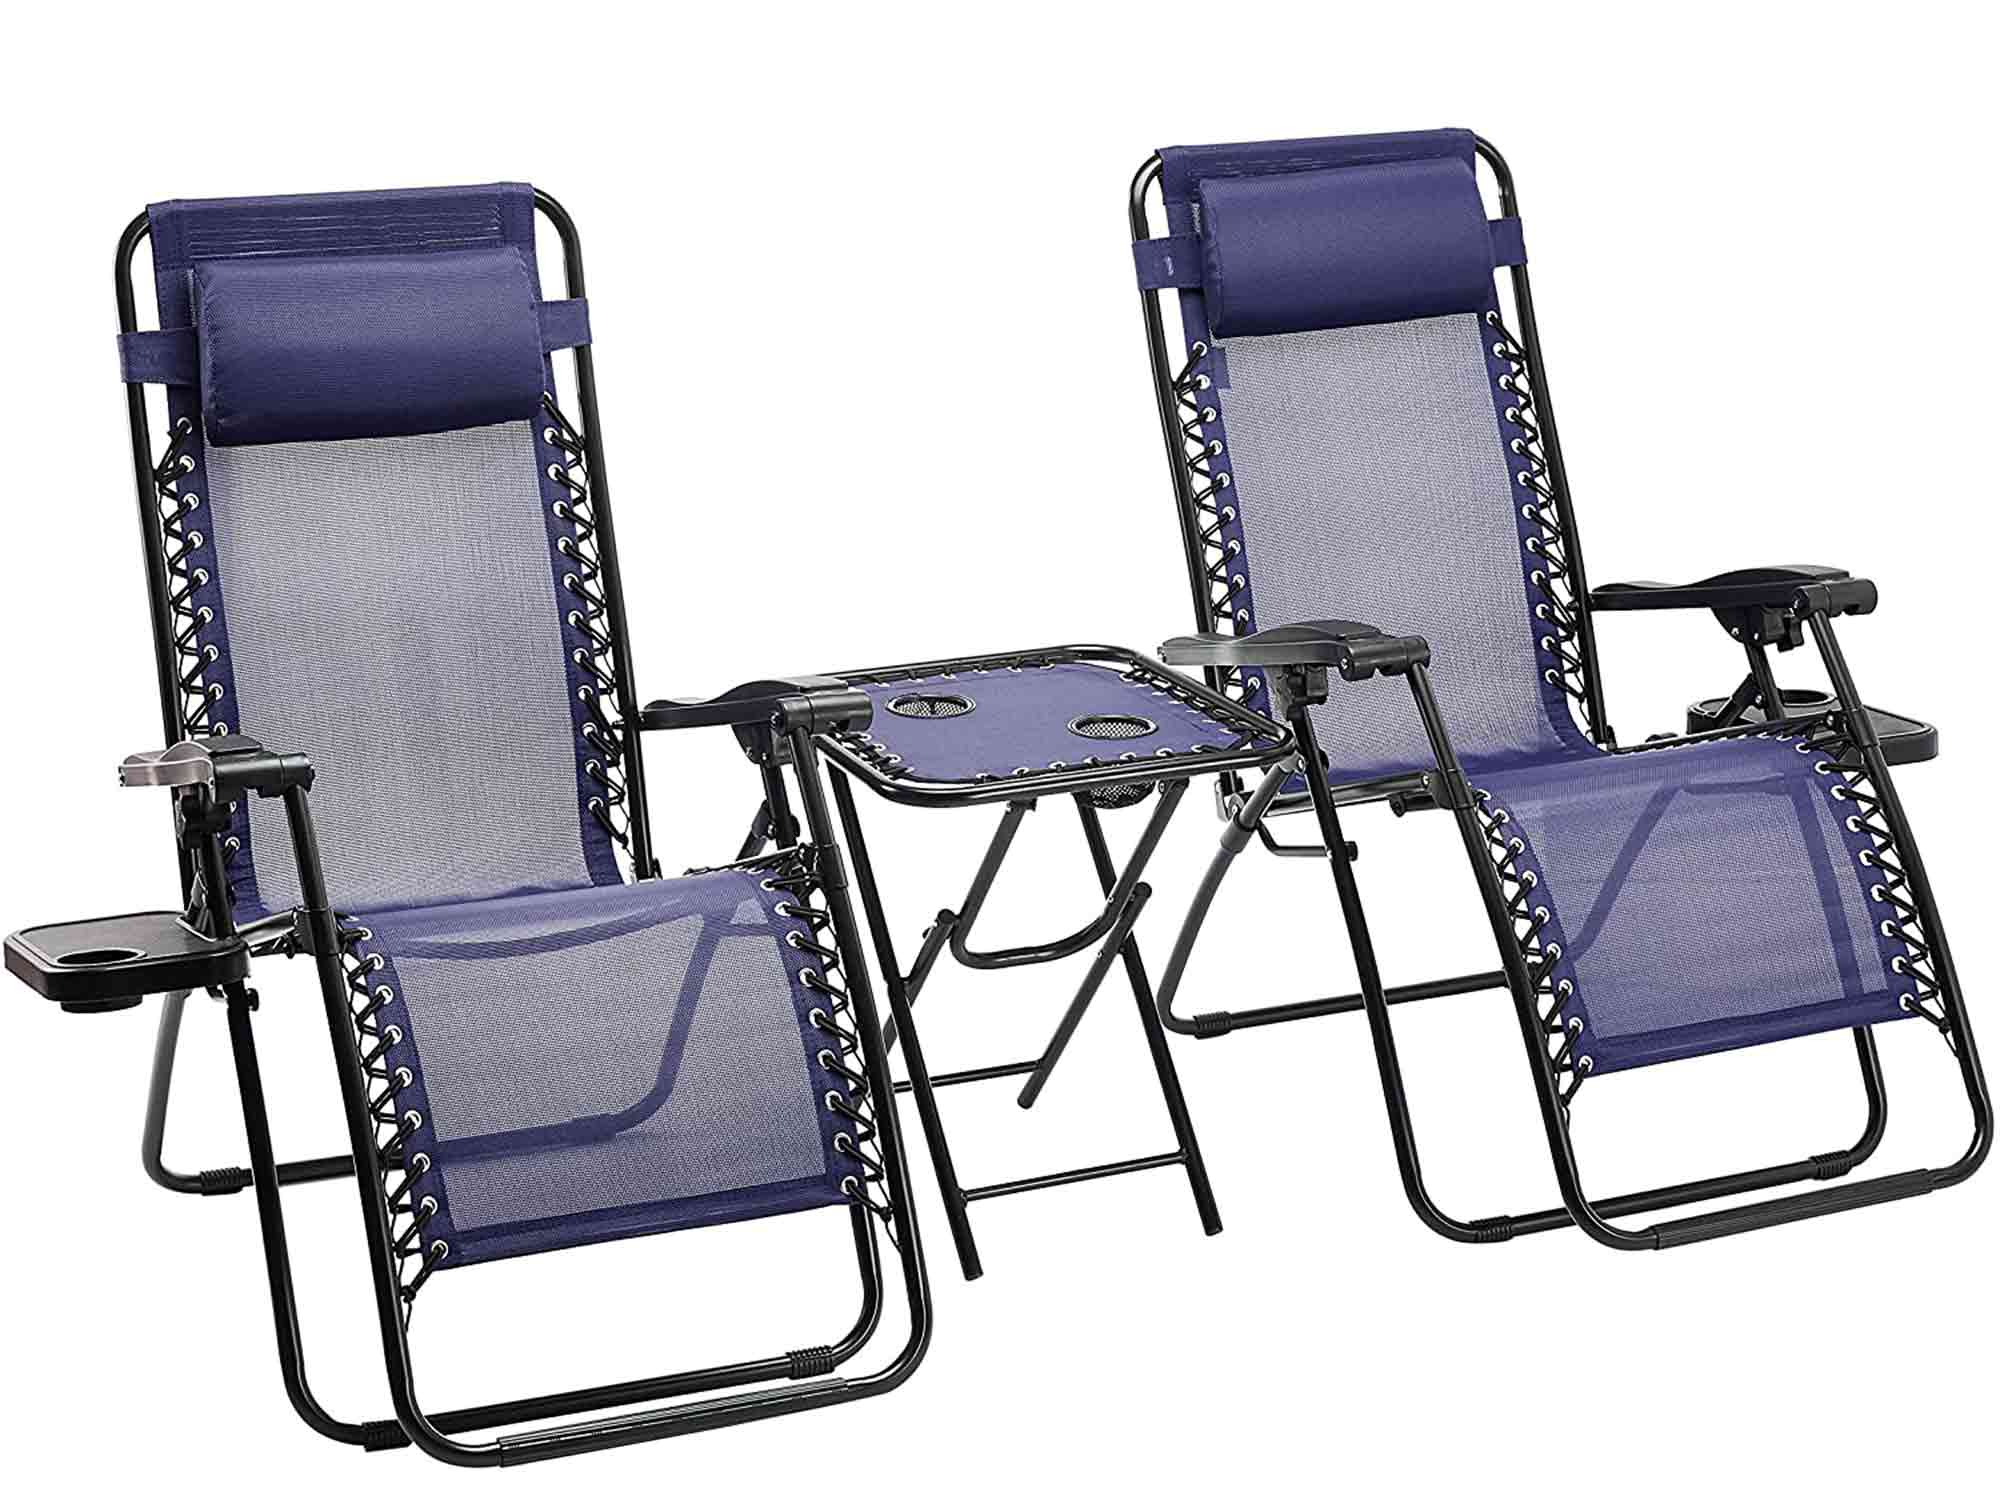 Amazon basics camping chair